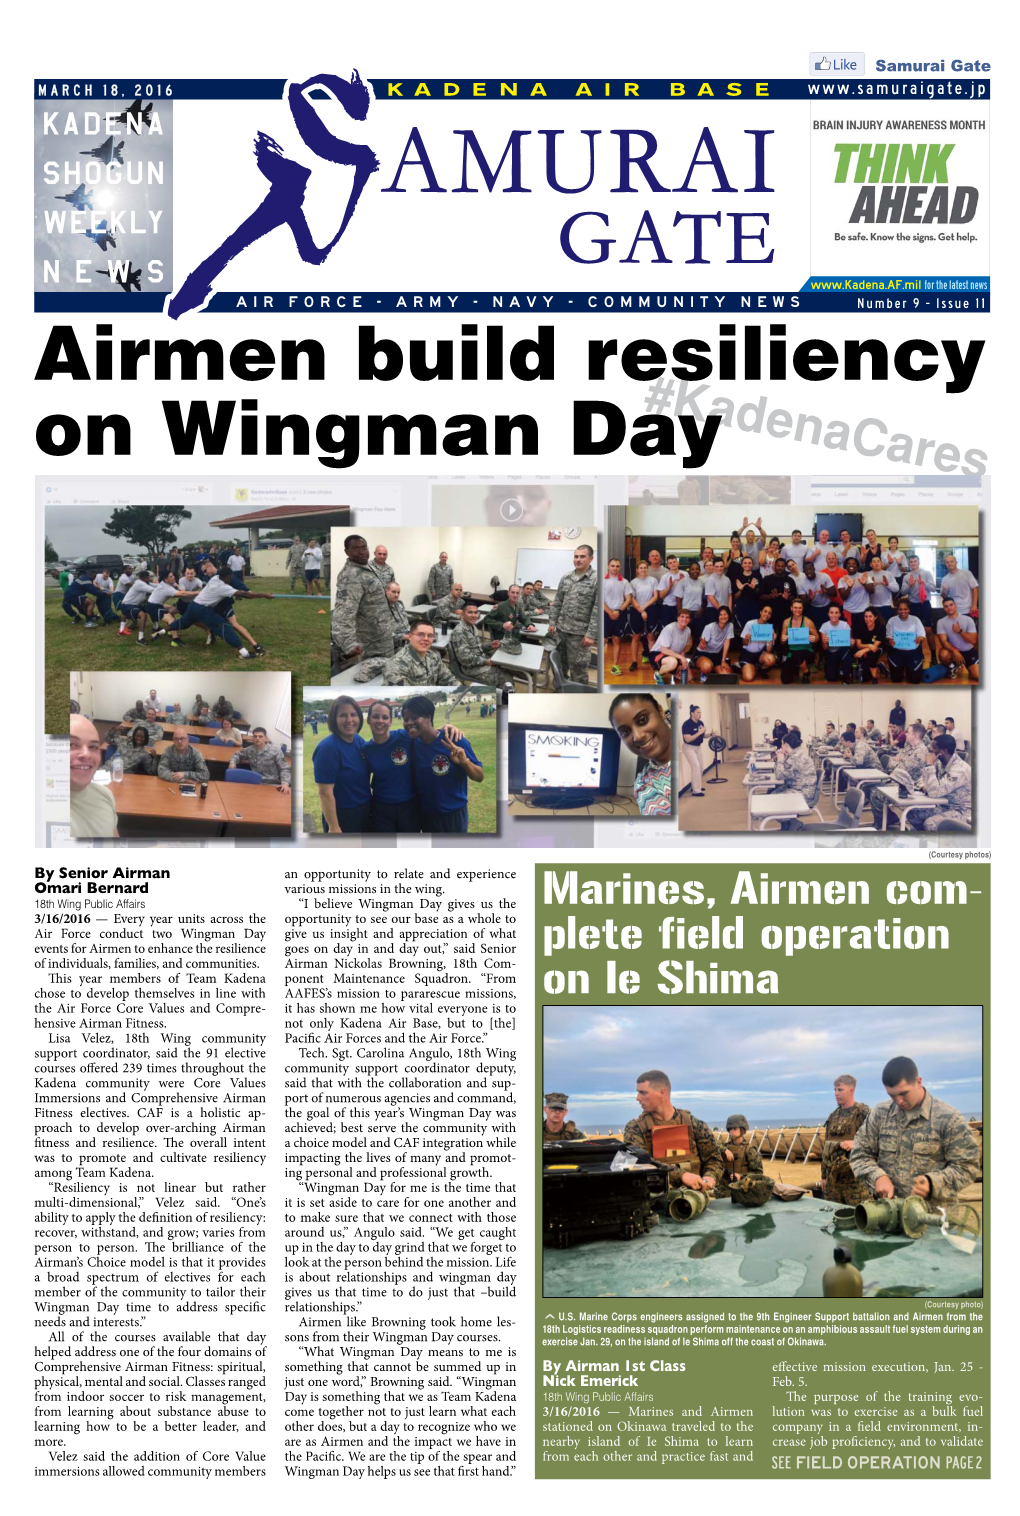 Airmen Build Resiliency on Wingman Day